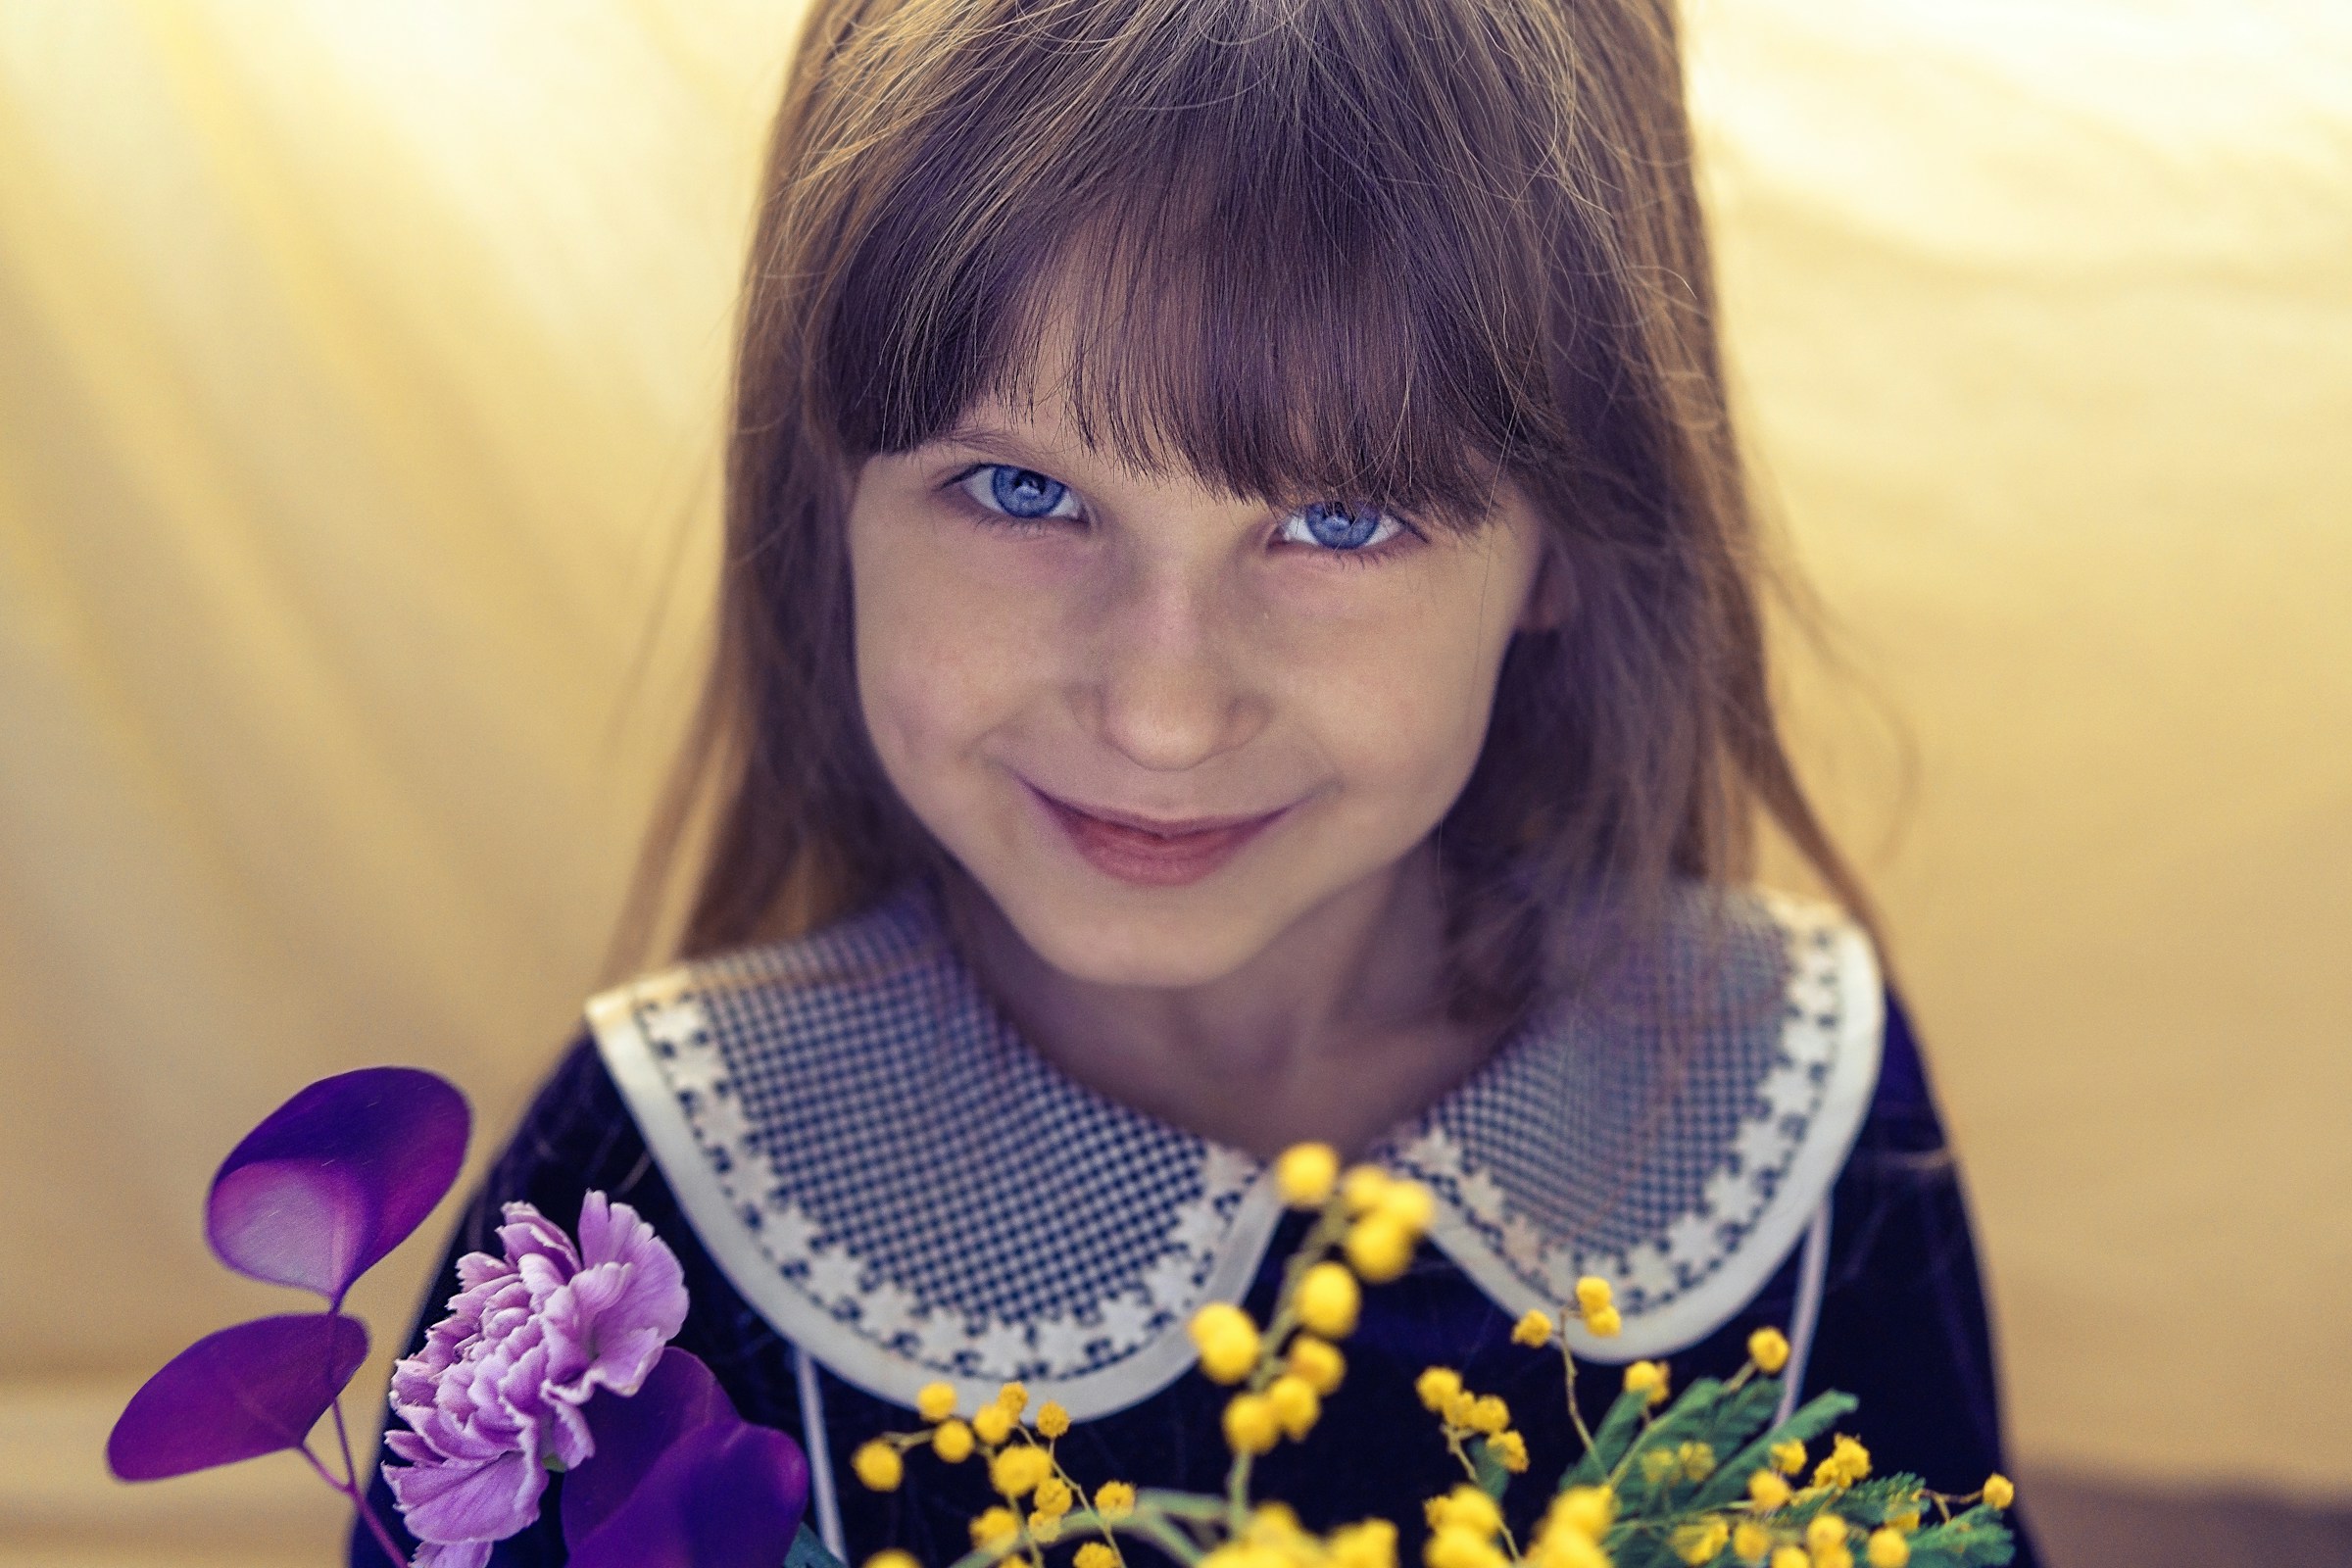 A little girl smiling | Source: Unsplash